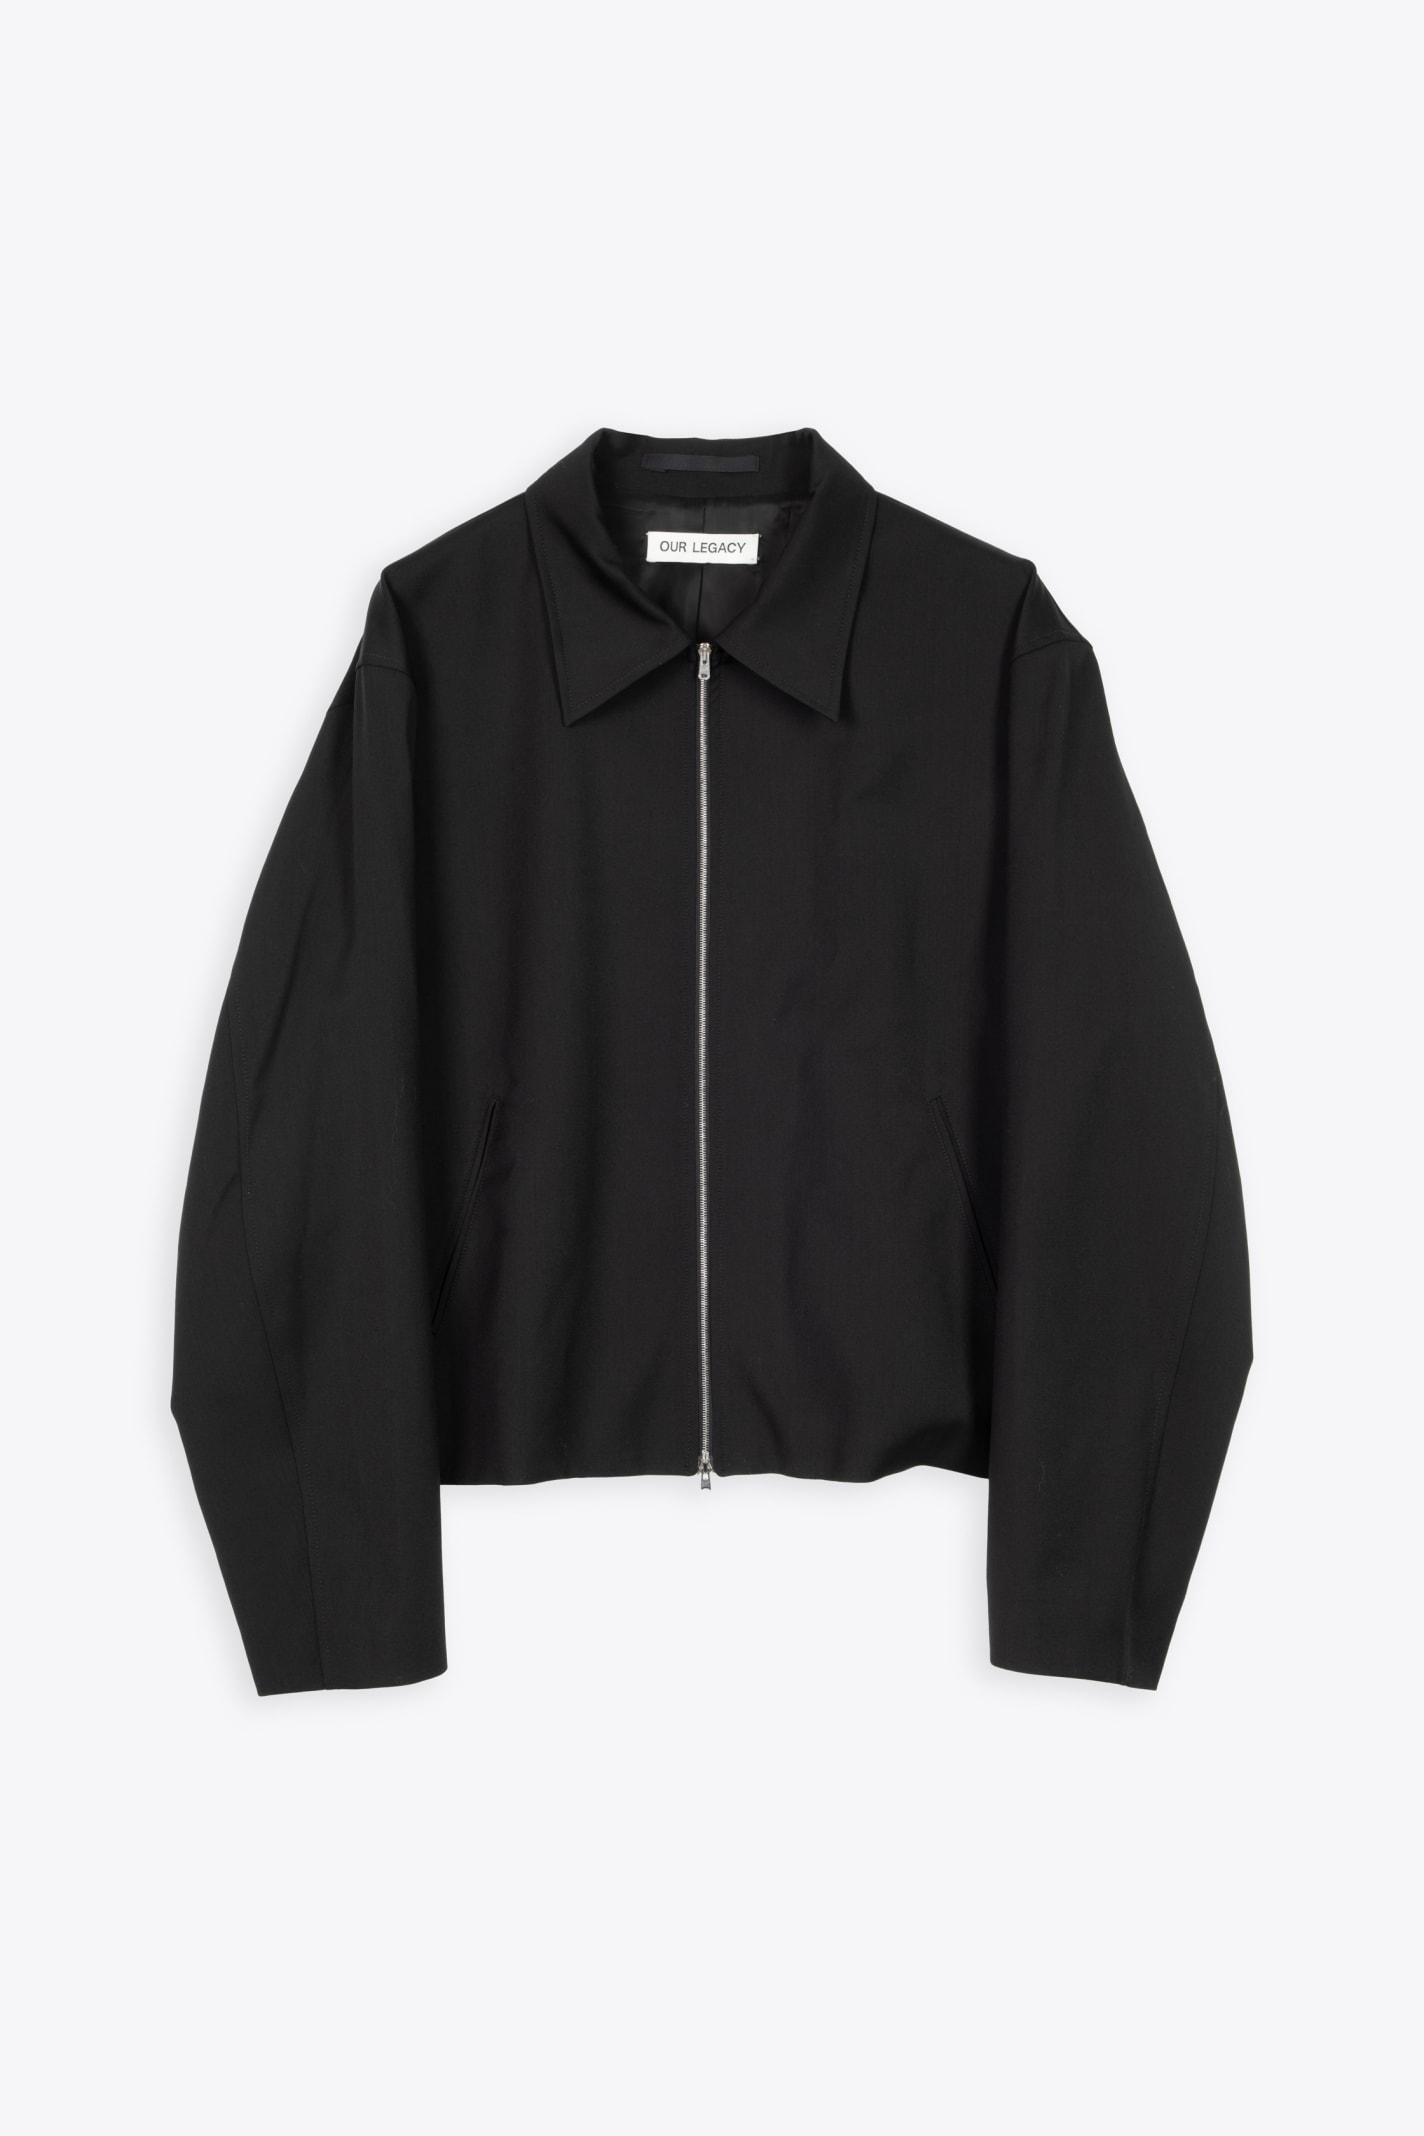 Shop Our Legacy Mini Jacket Black Wool Tailored Boxy Jacket - Mini Jacket In Nero